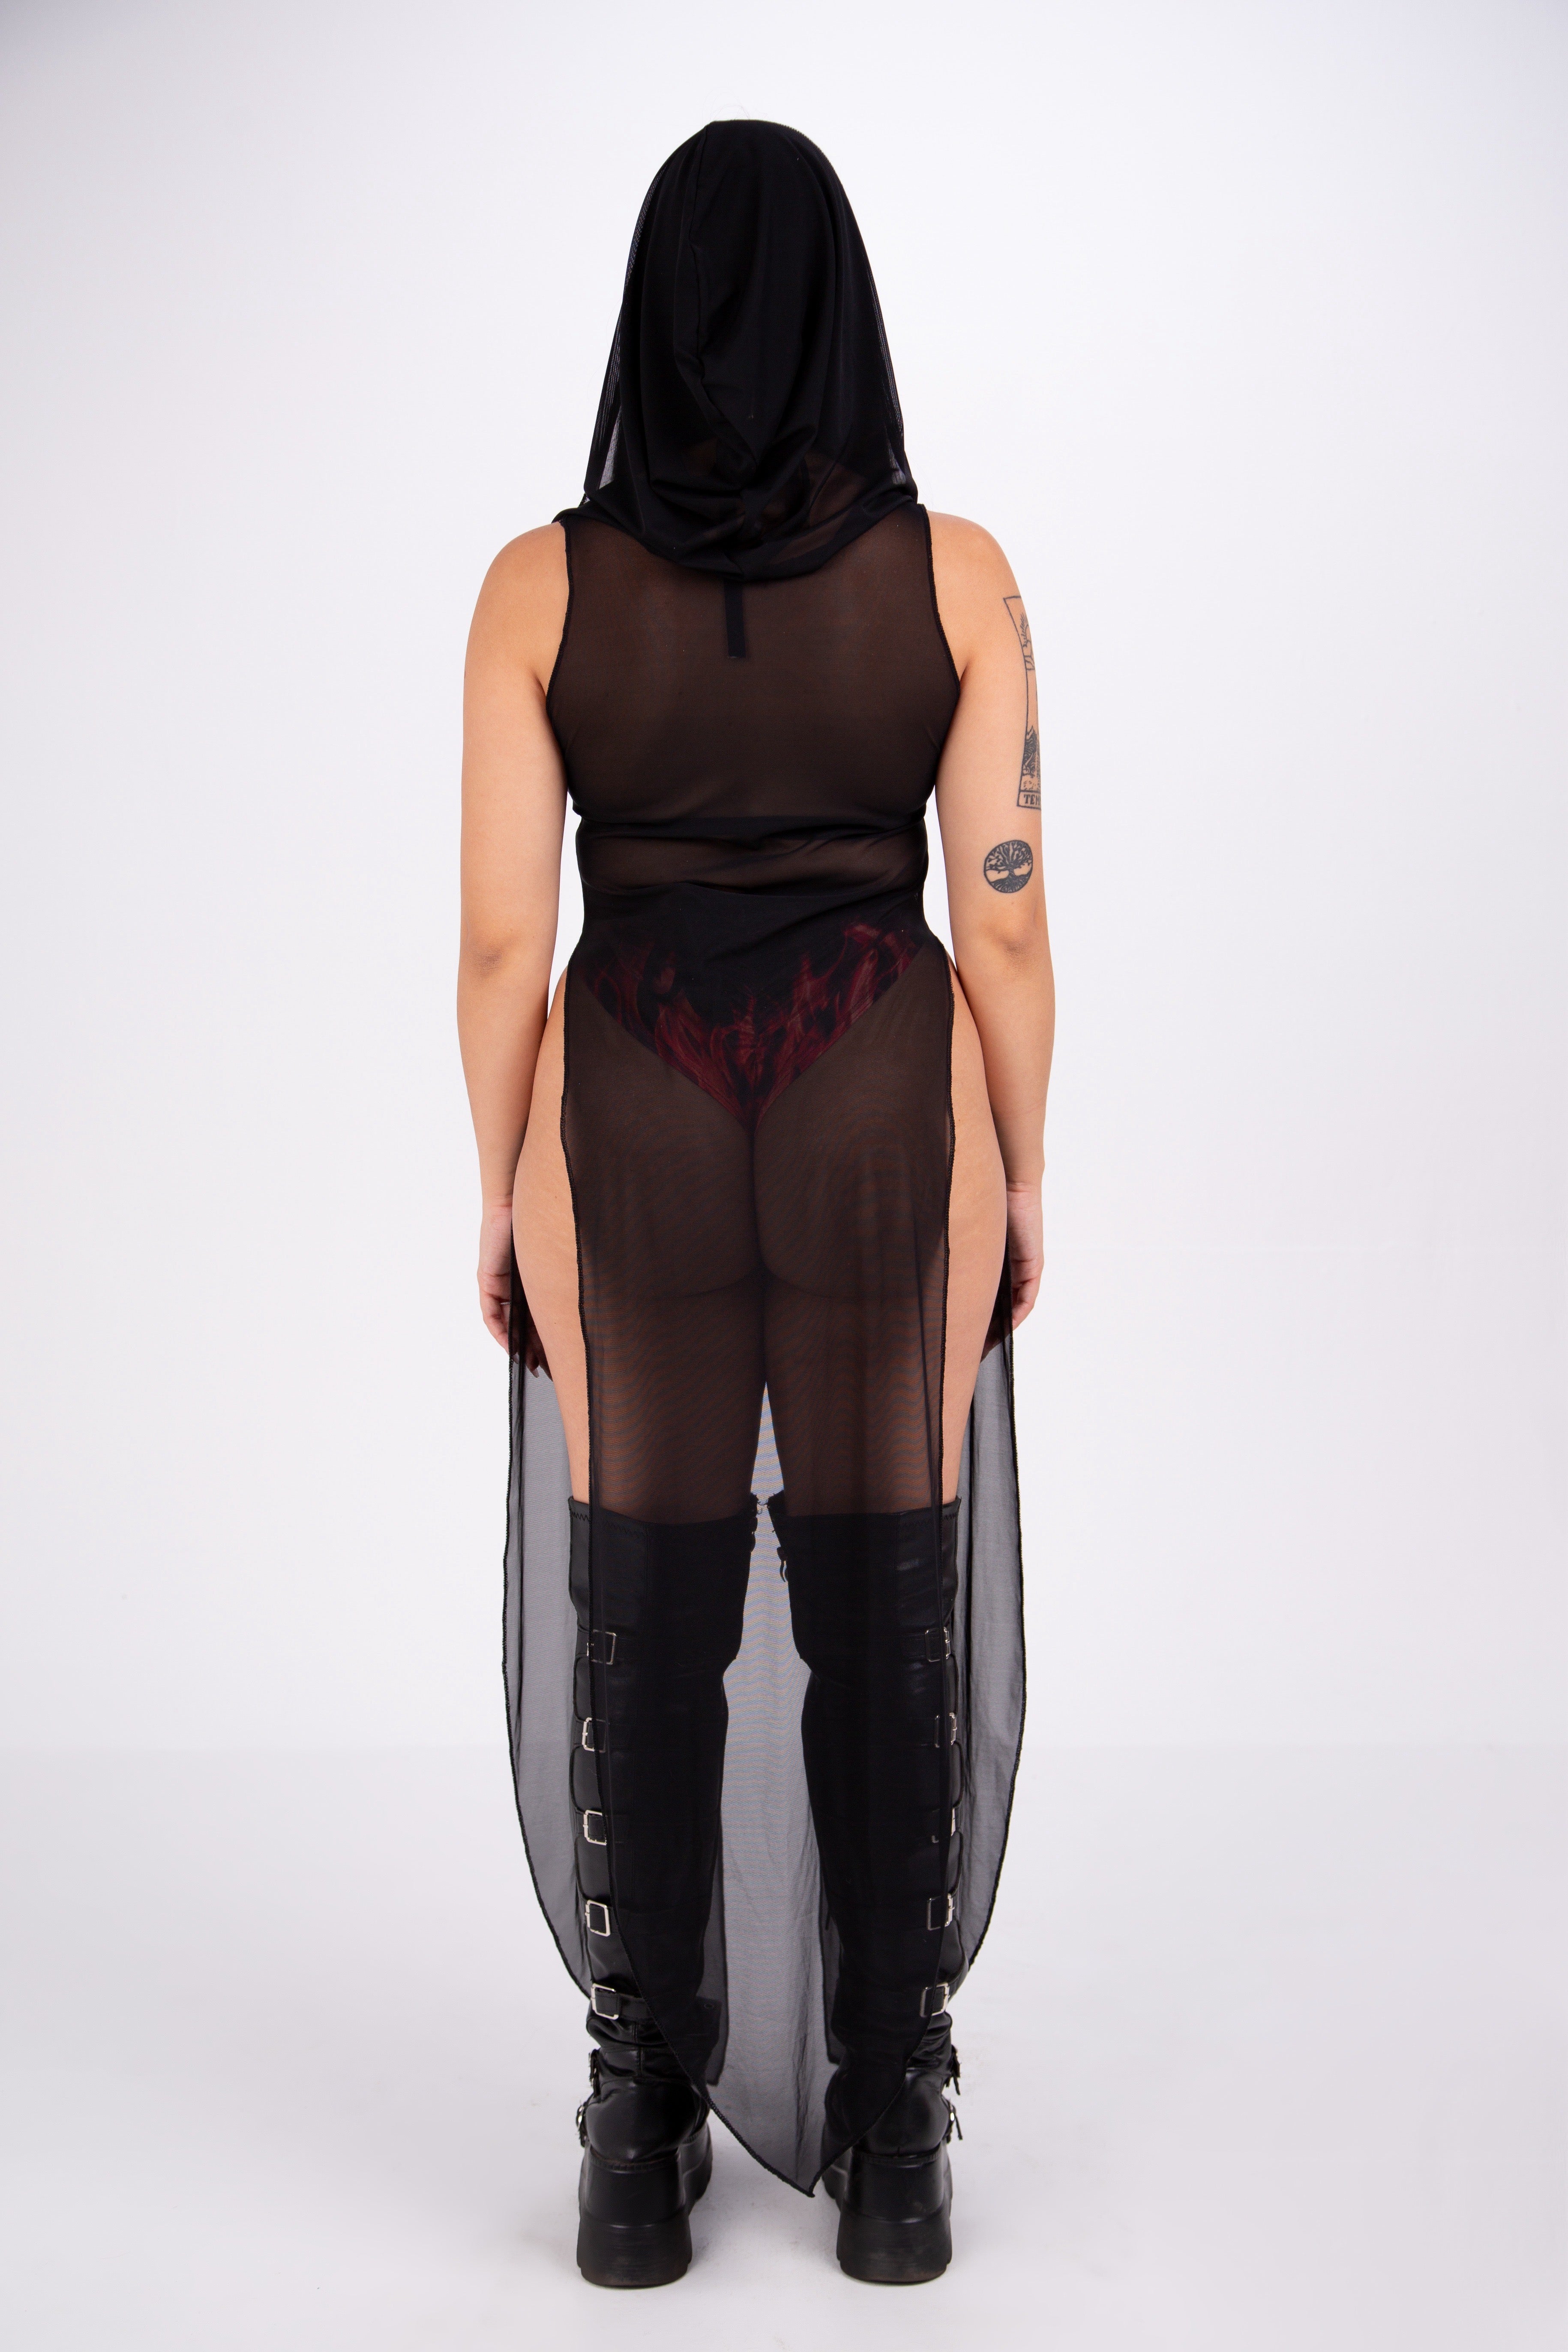 La Cosa Hooded Dress - Black Mesh bodysuit Mi Gente Clothing   